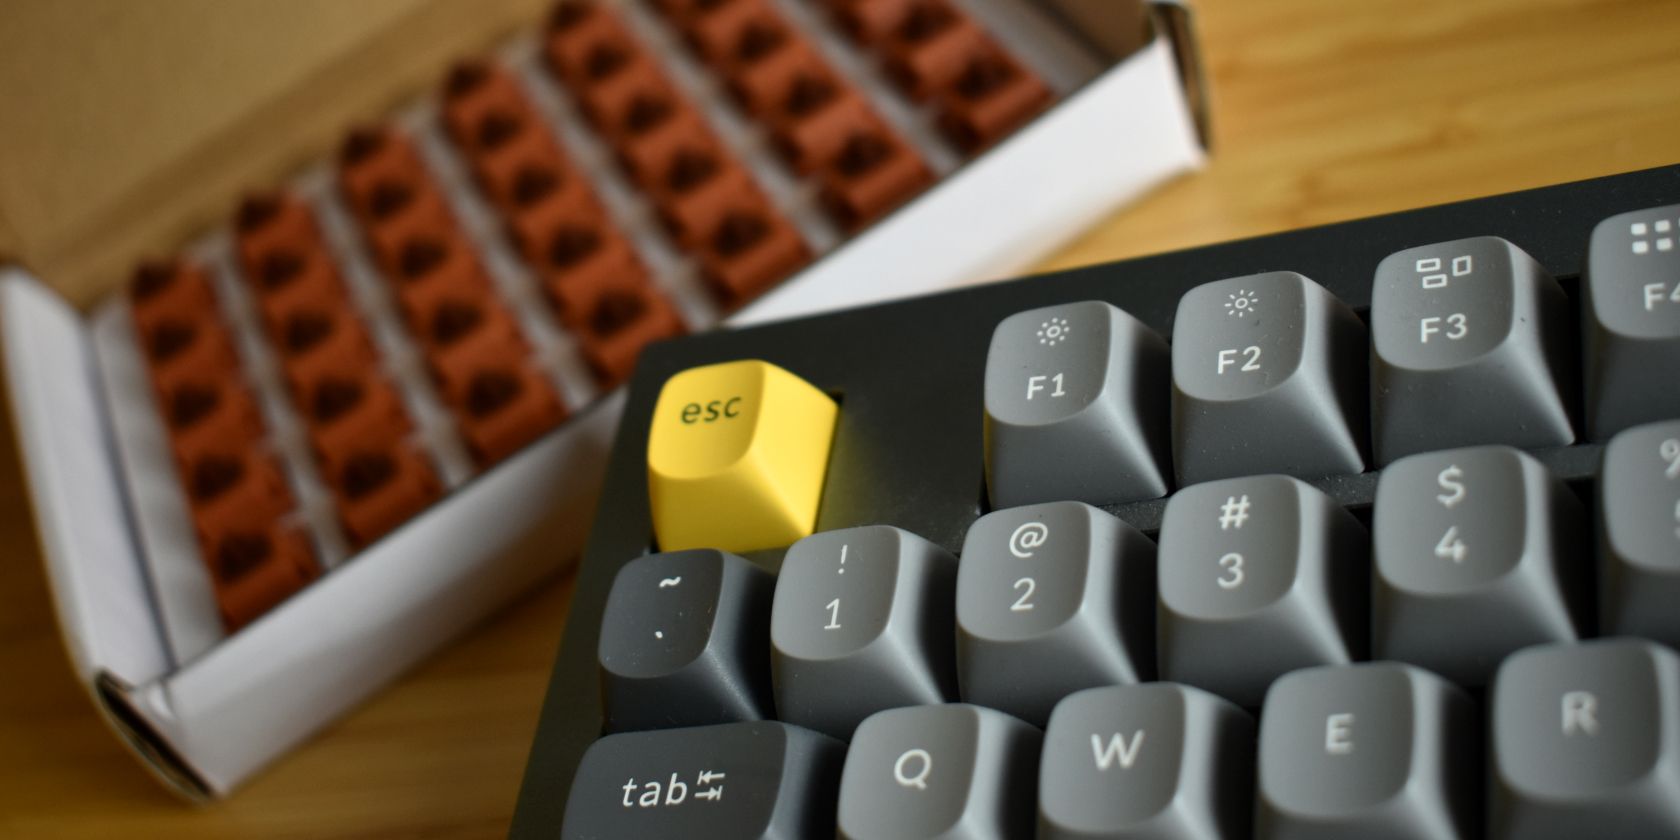 keychron q5 keyboard esc key with switches